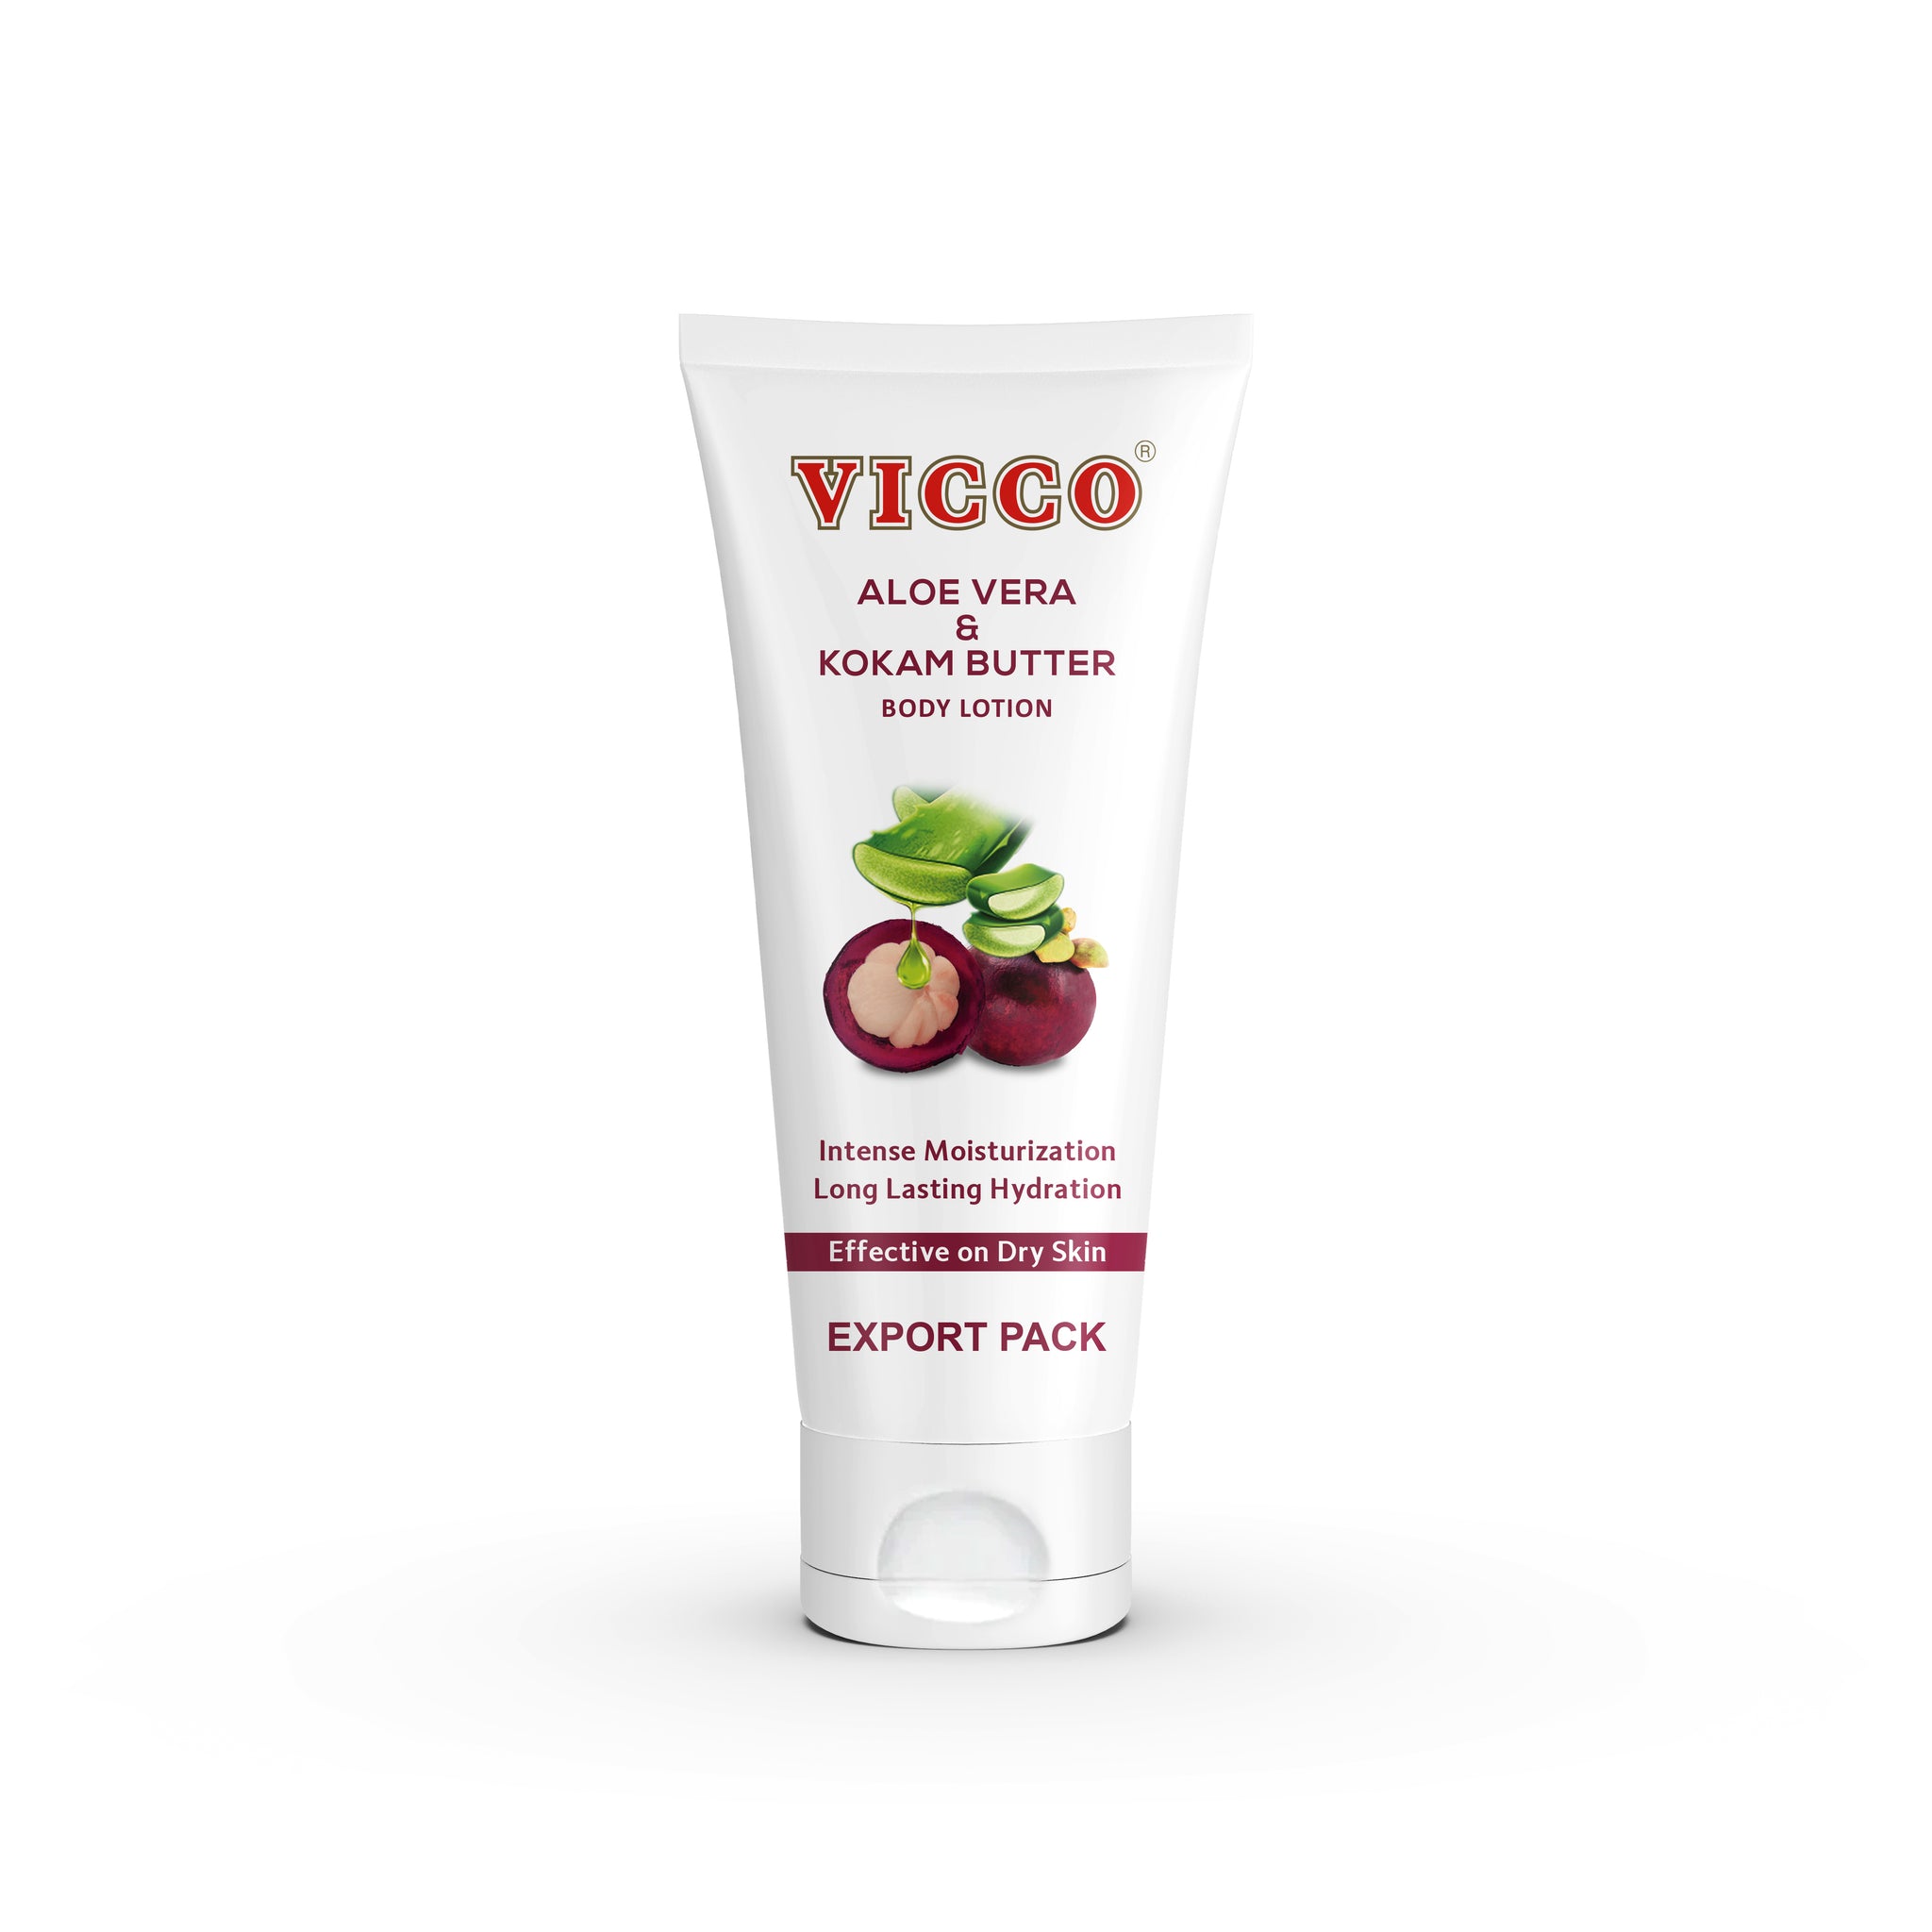 Vicco Aloe vera & kokum butter body lotion (100 g) - UAE